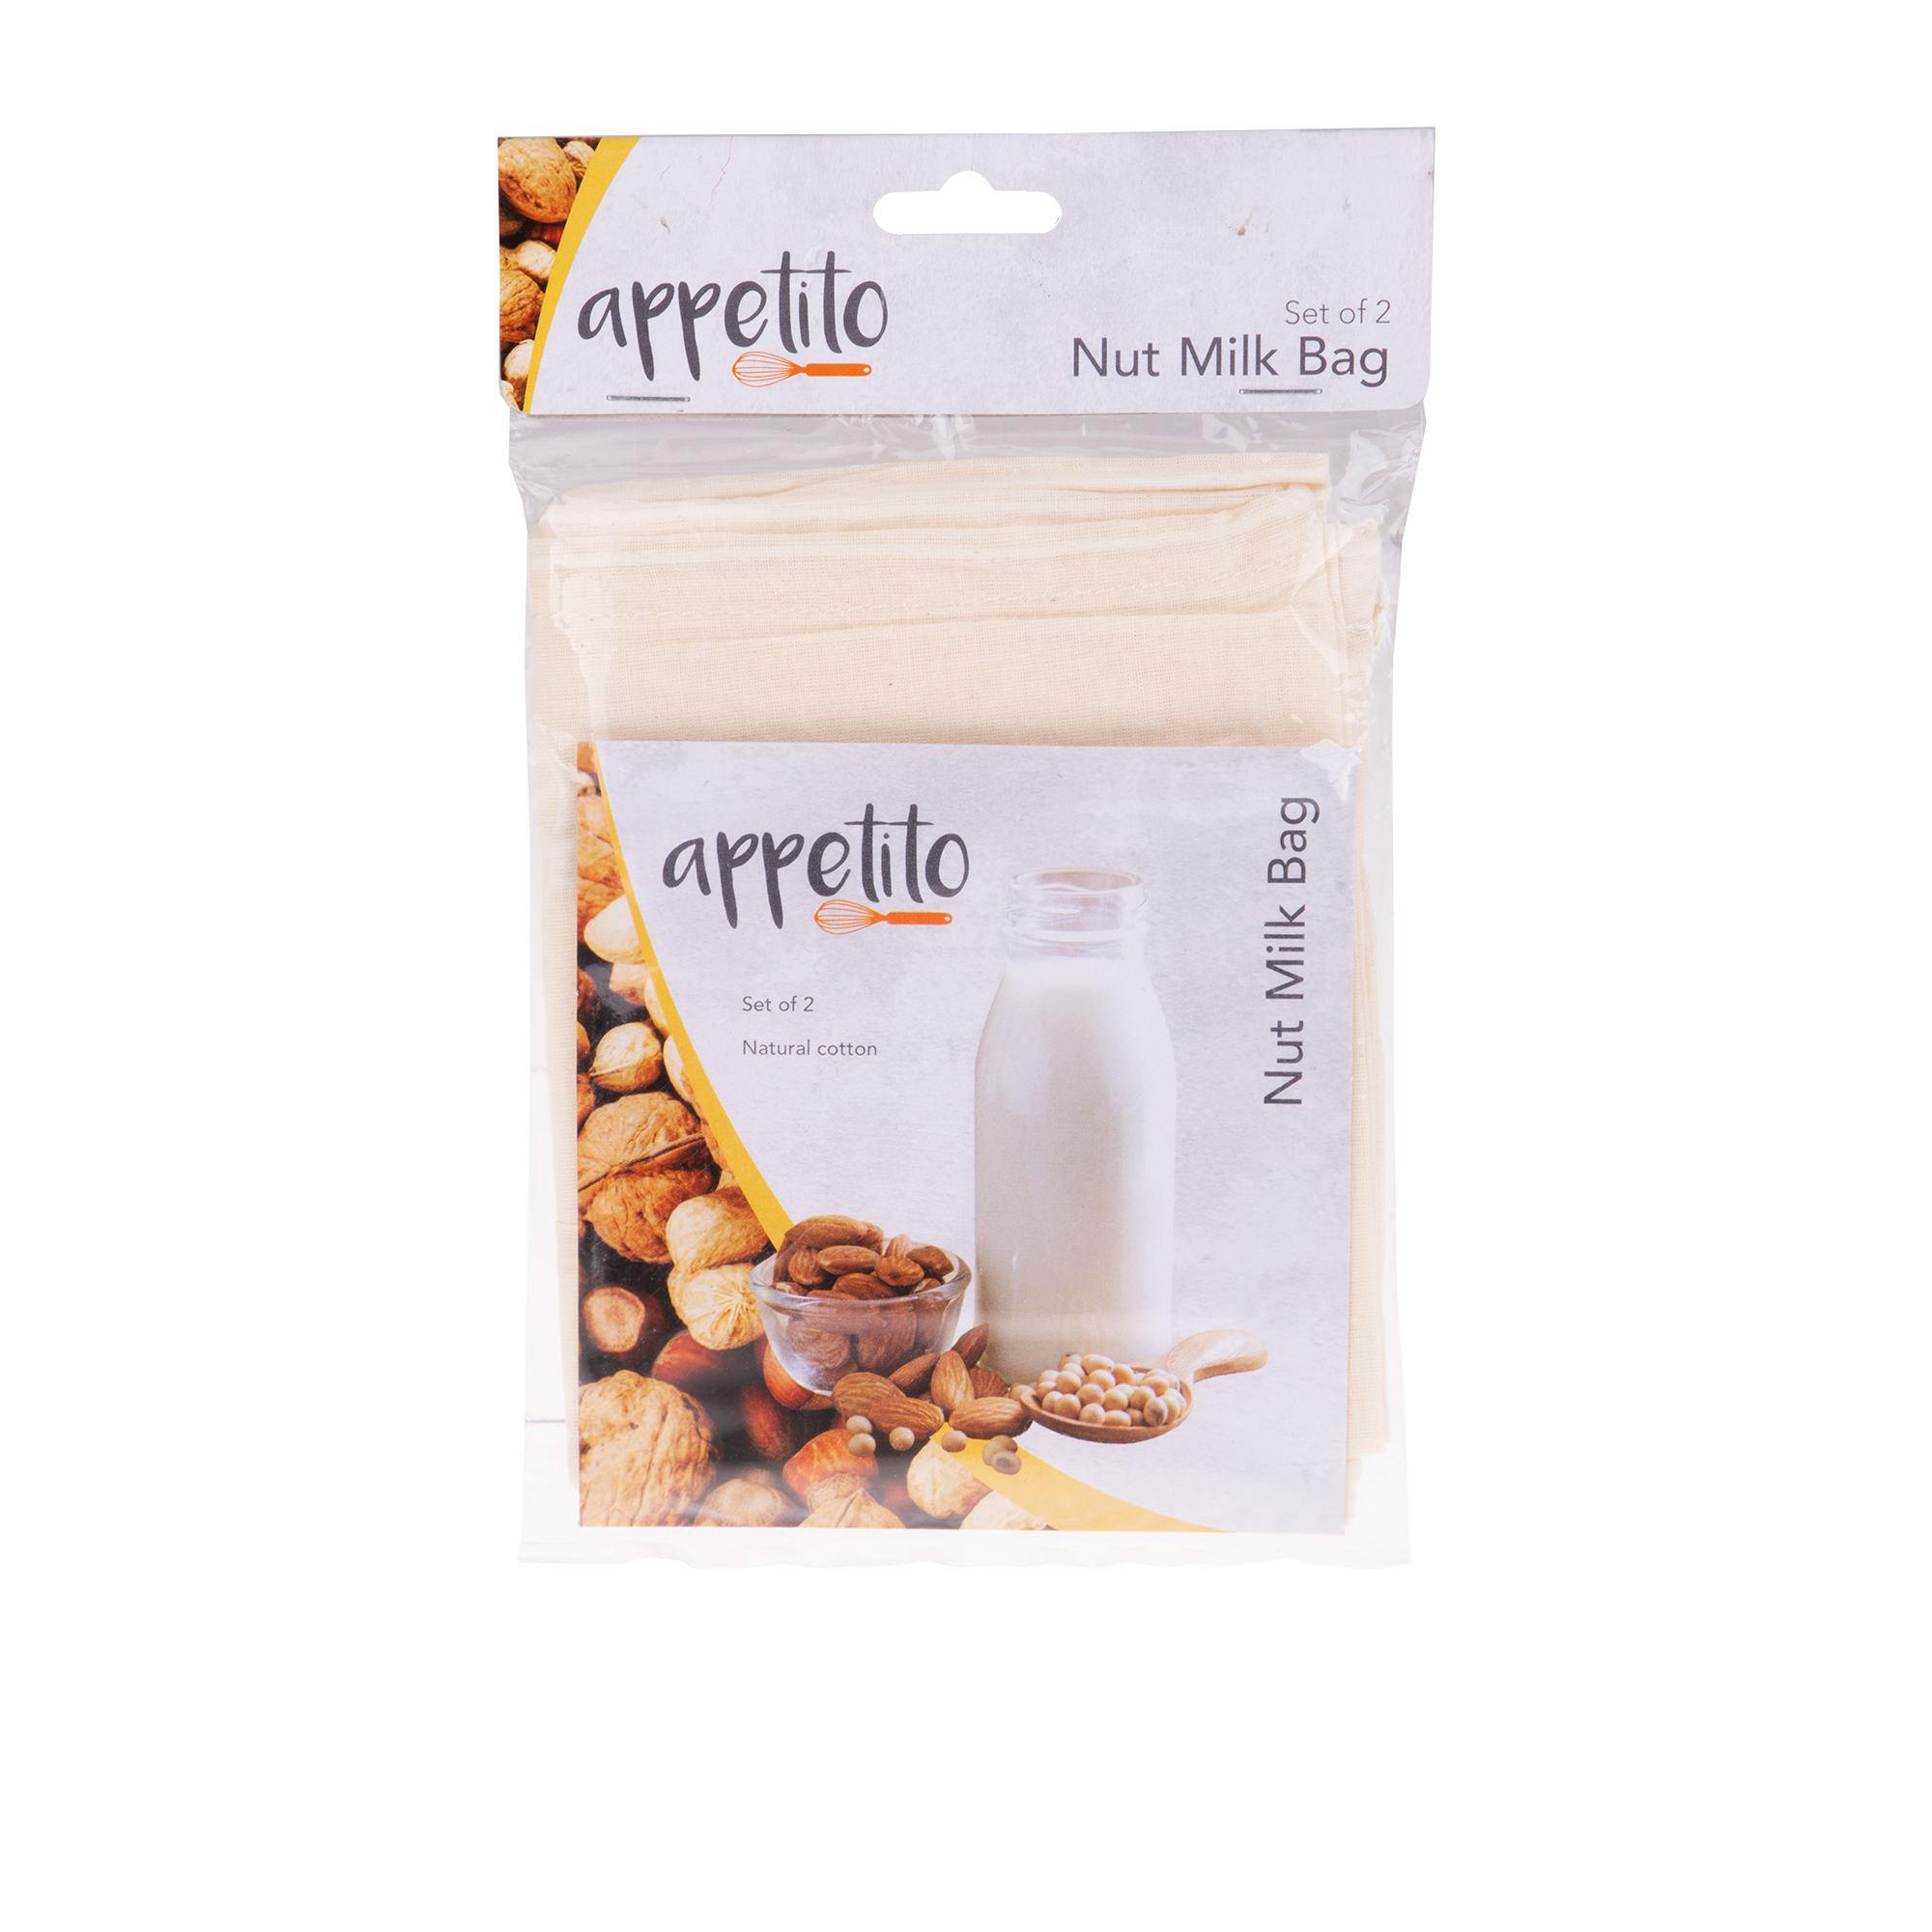 Appetito Nut Milk Bag Set of 2 Image 2